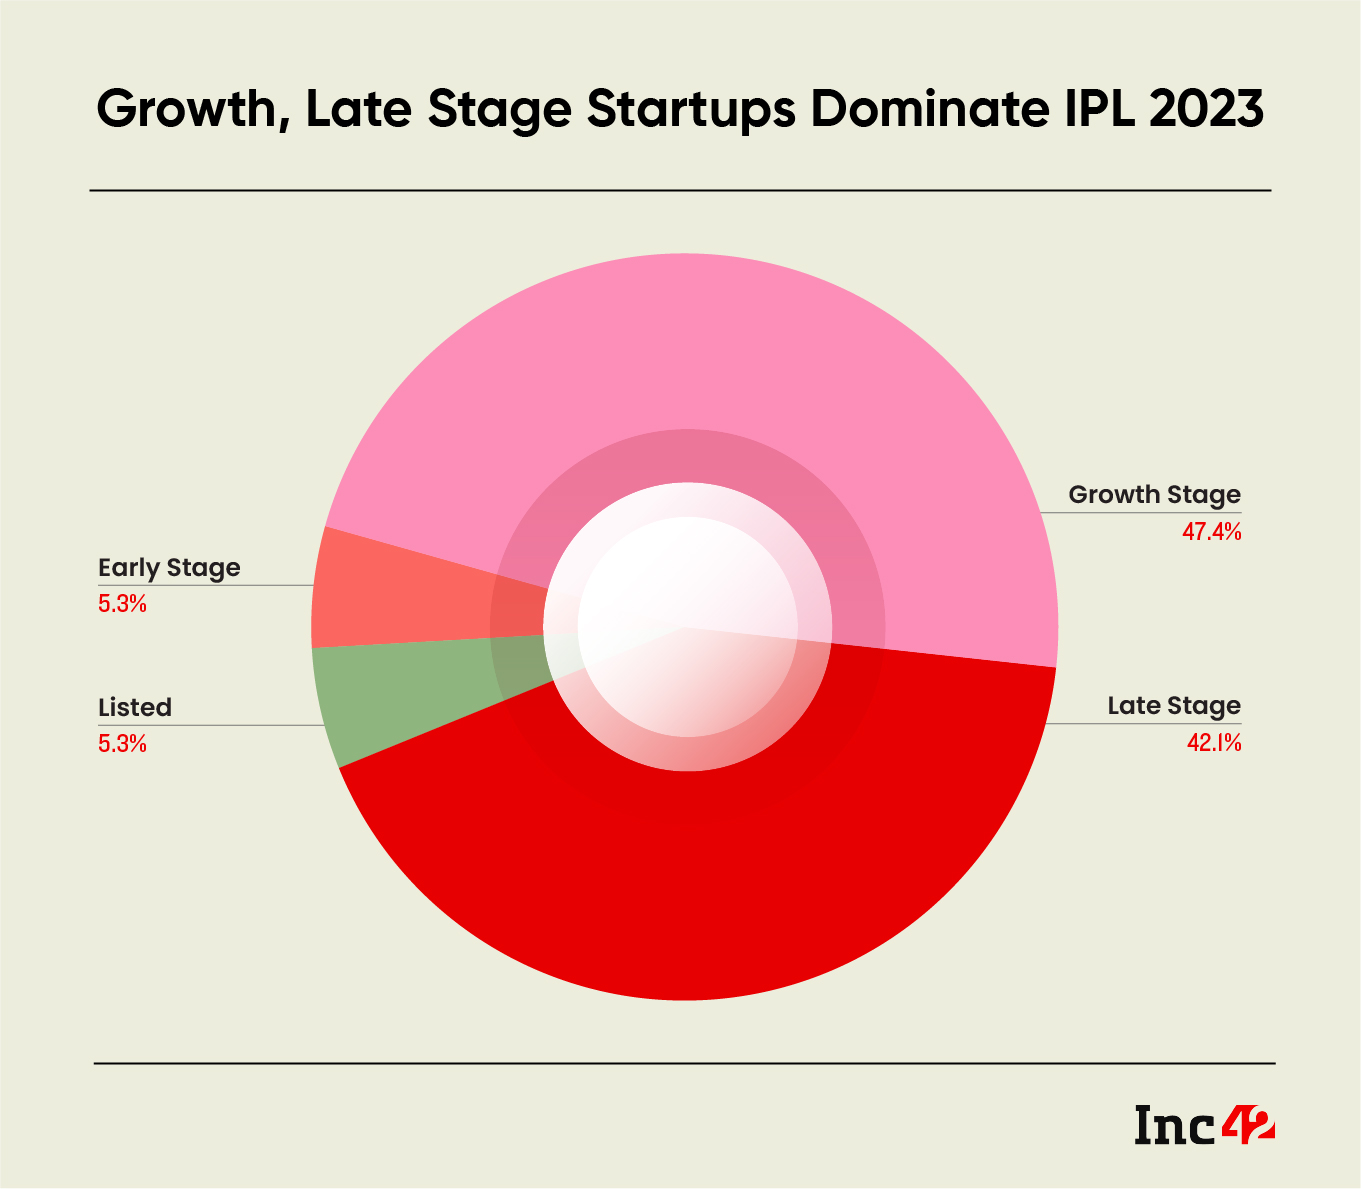 Startup dominate IPL 2023